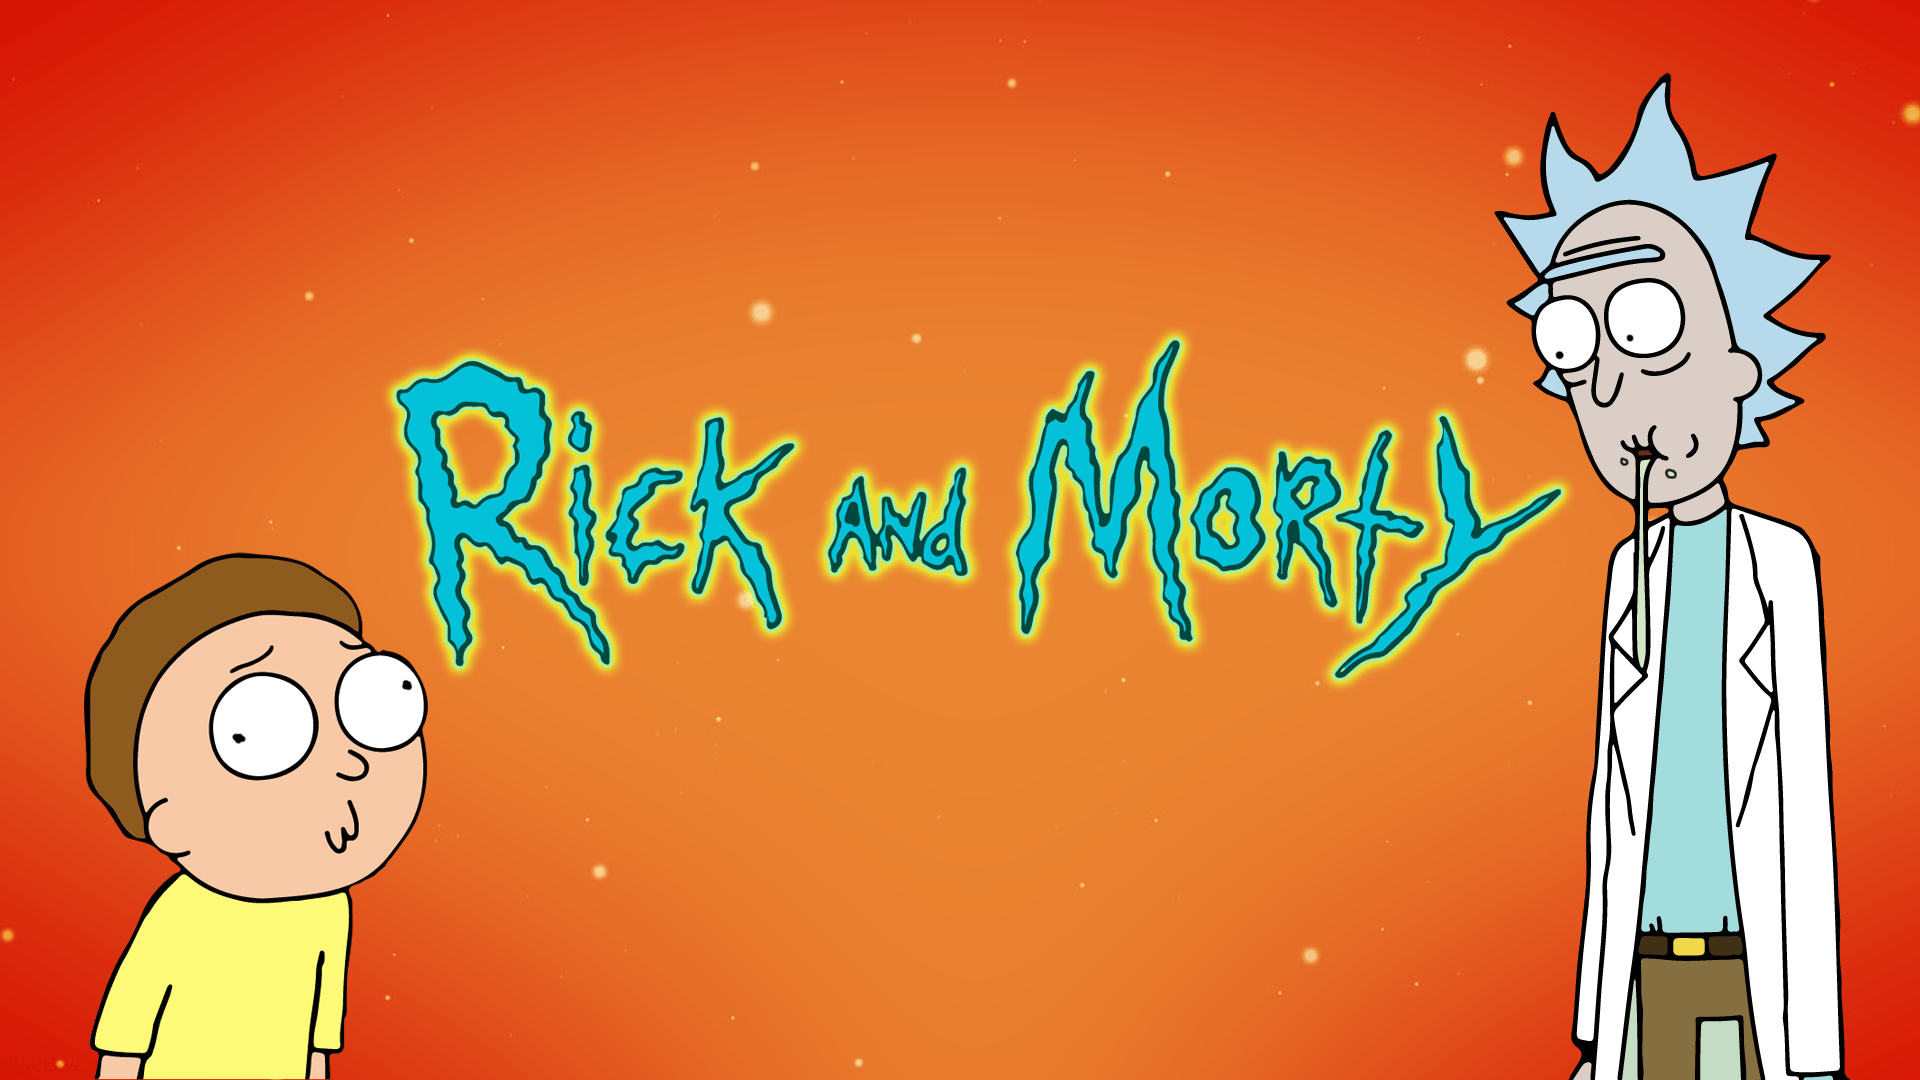 Rick and Morty Wallpaper, 1920x1080